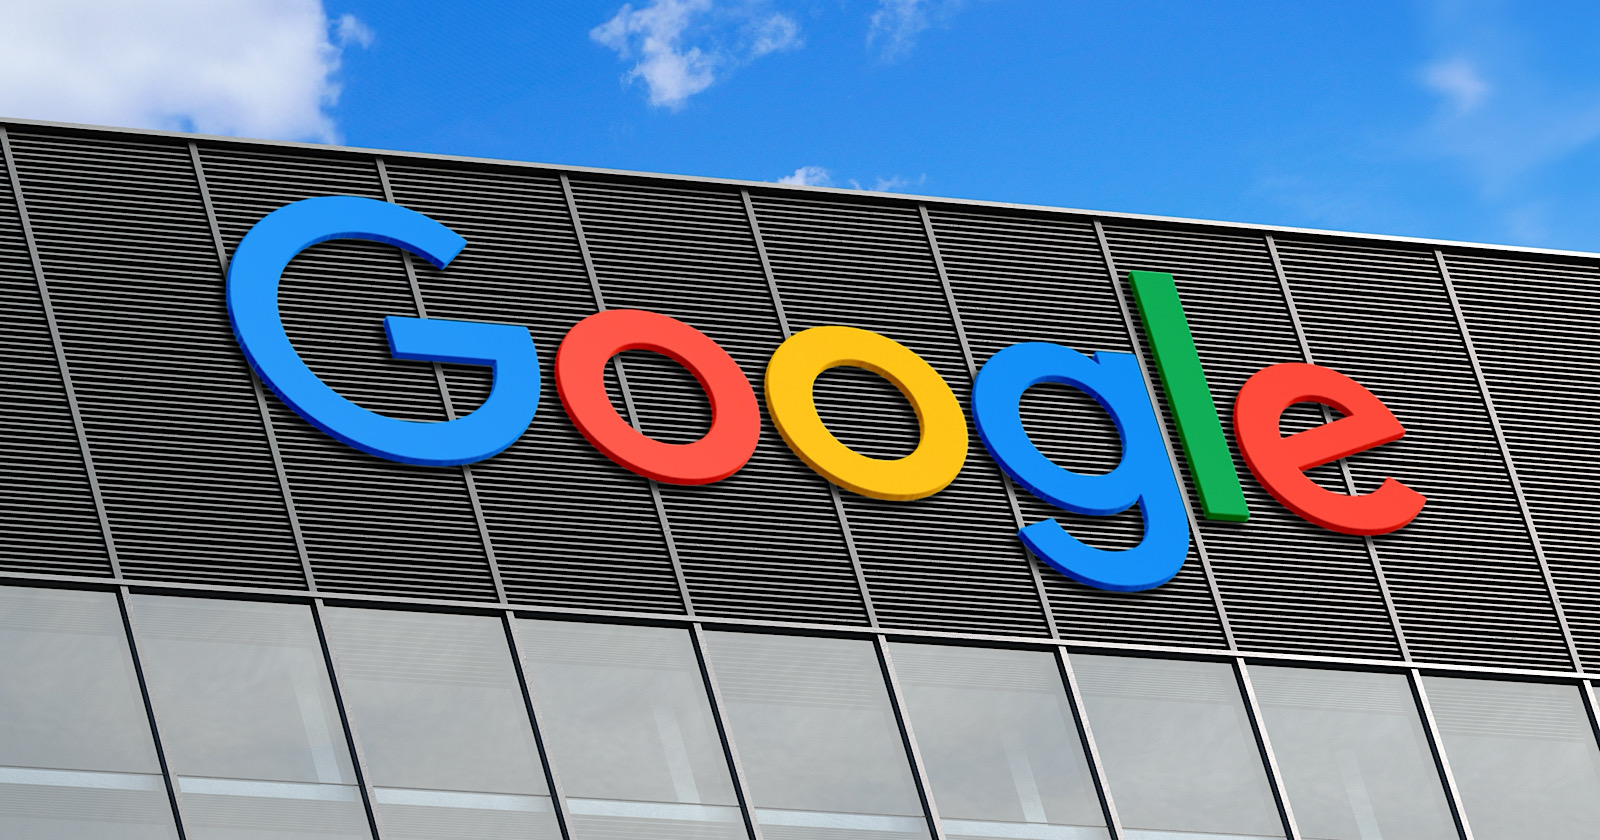 Google Improves INP For Sites Using Consent Management Platforms